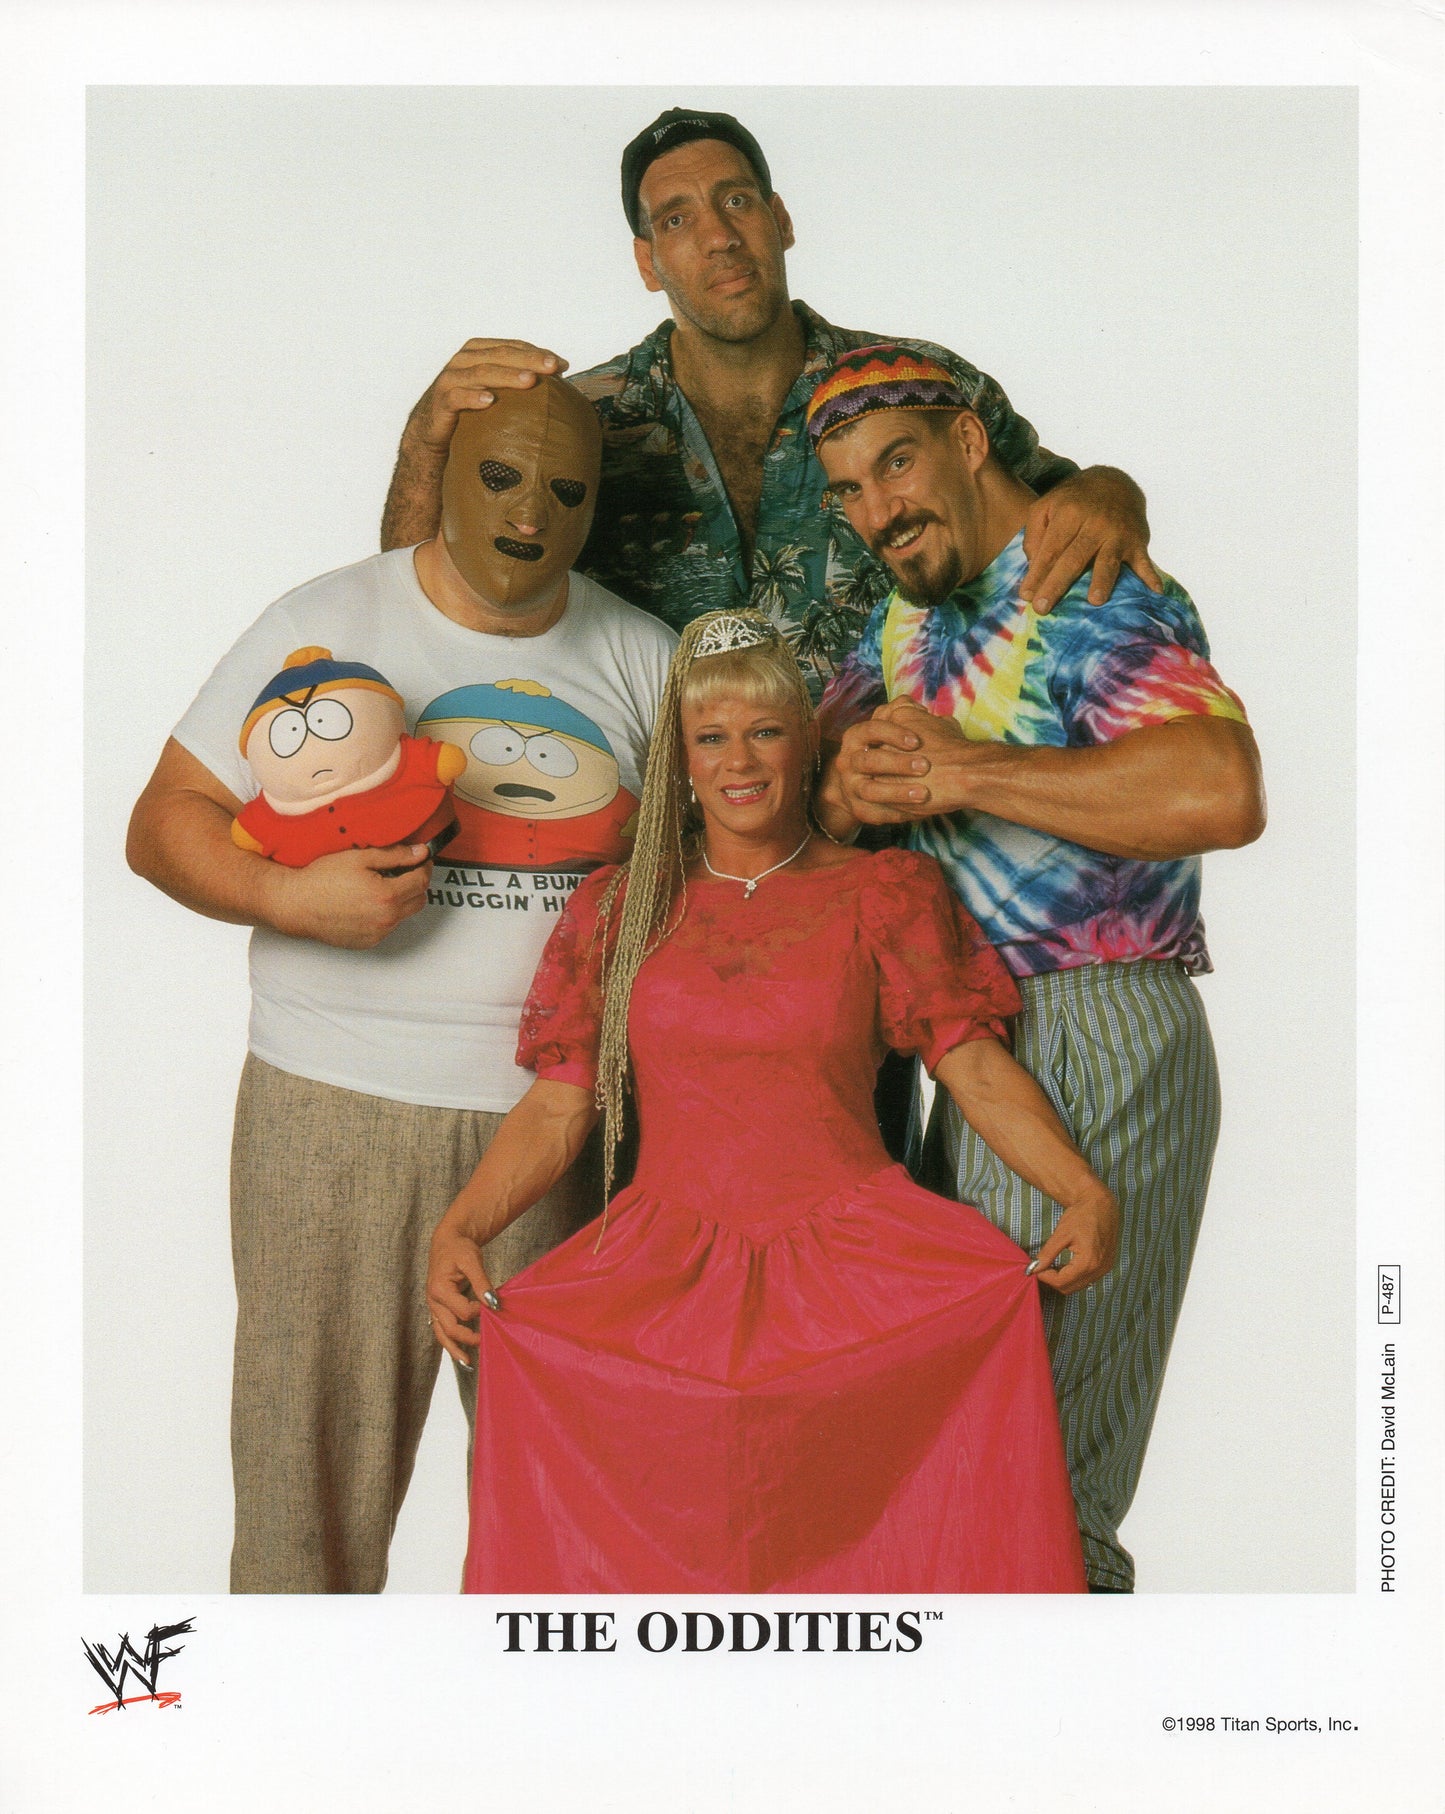 The Oddities WWF Promo Photo